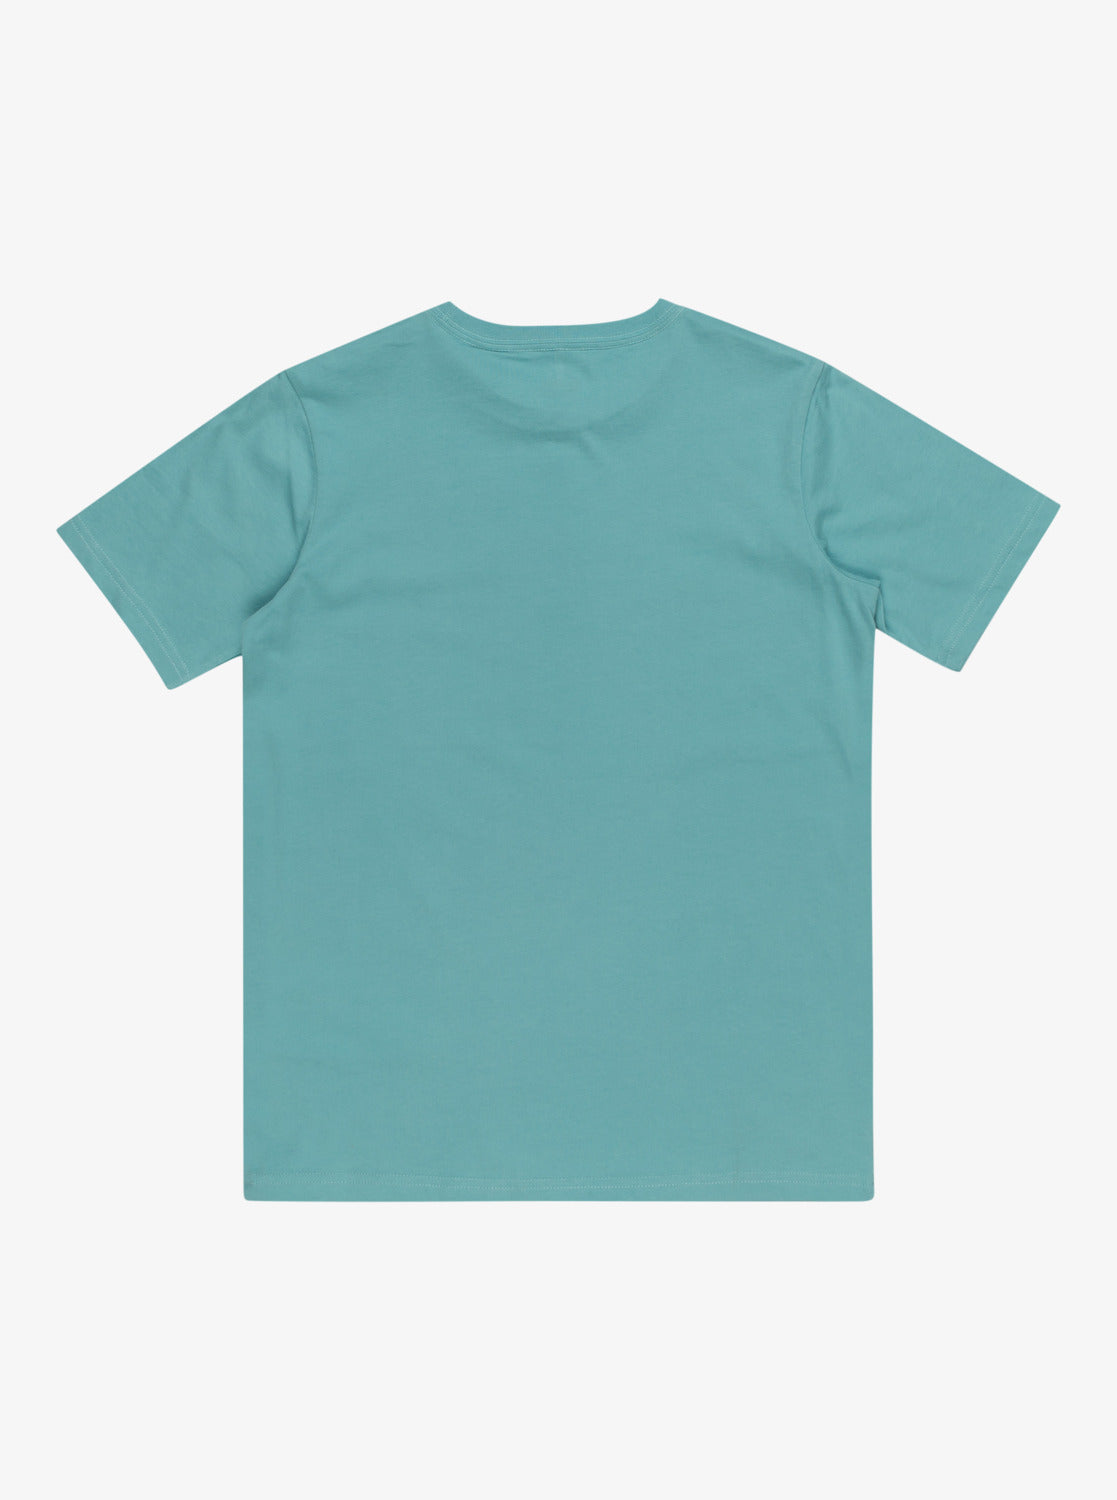 Quiksilver Bubble Arch Boys T-Shirt in Marine Blue